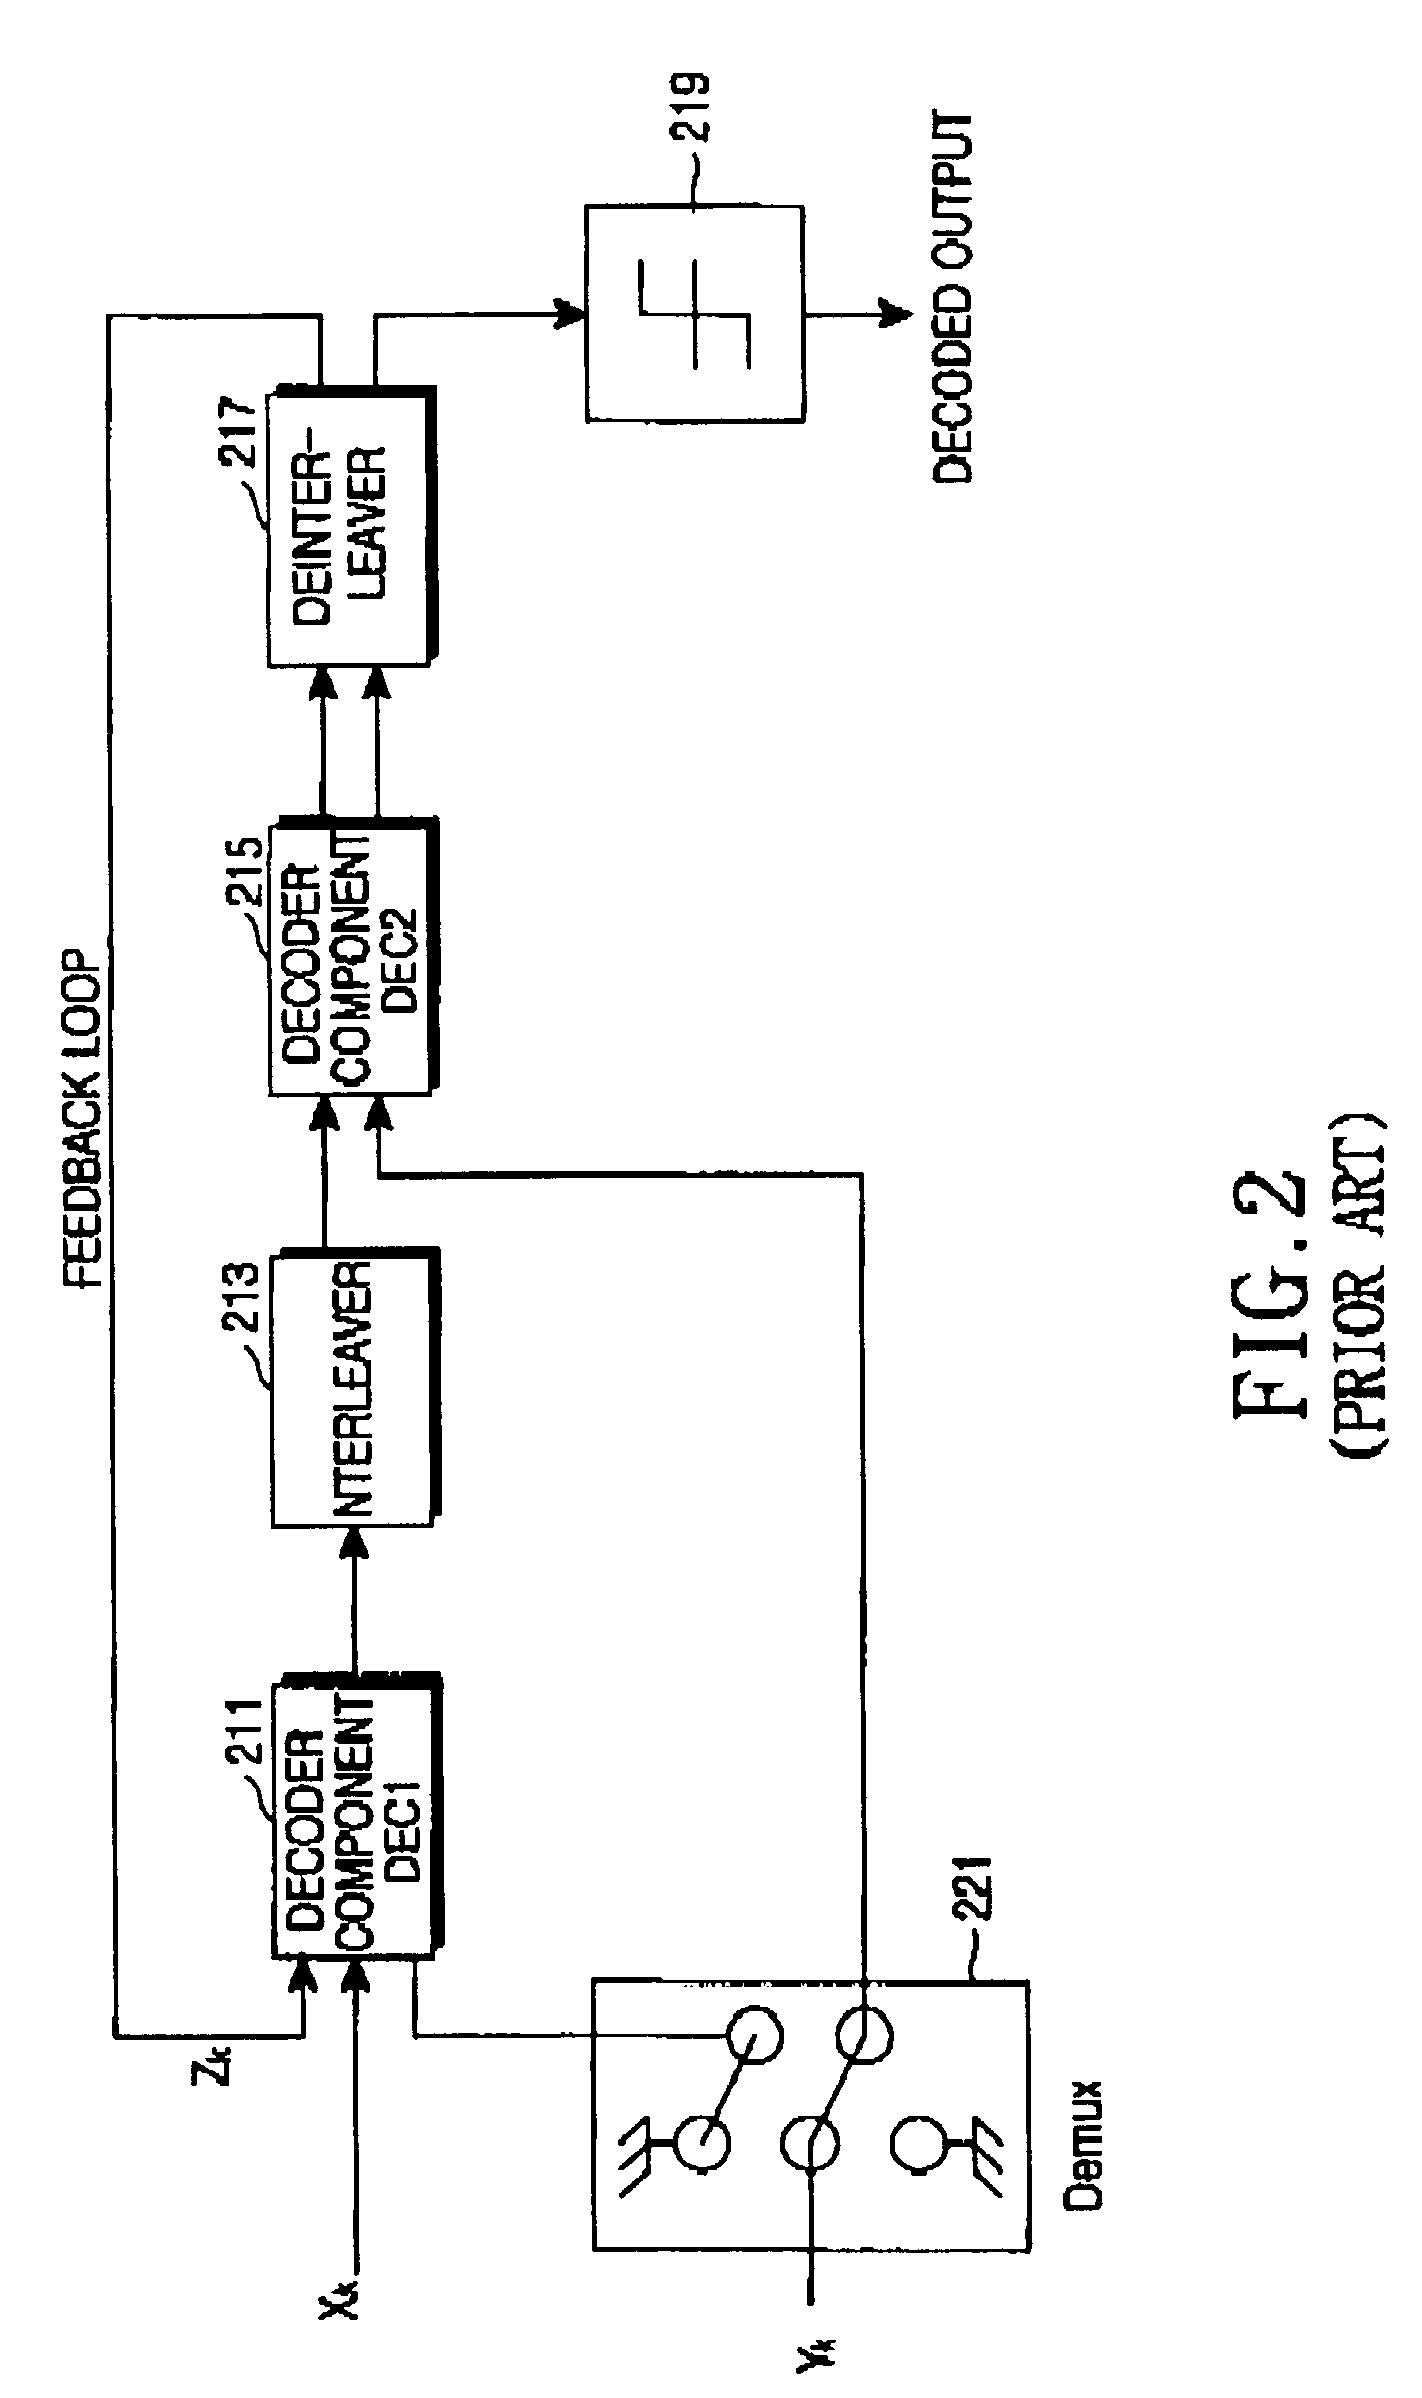 Apparatus and method for memory sharing between interleaver and deinterleaver in a turbo decoder